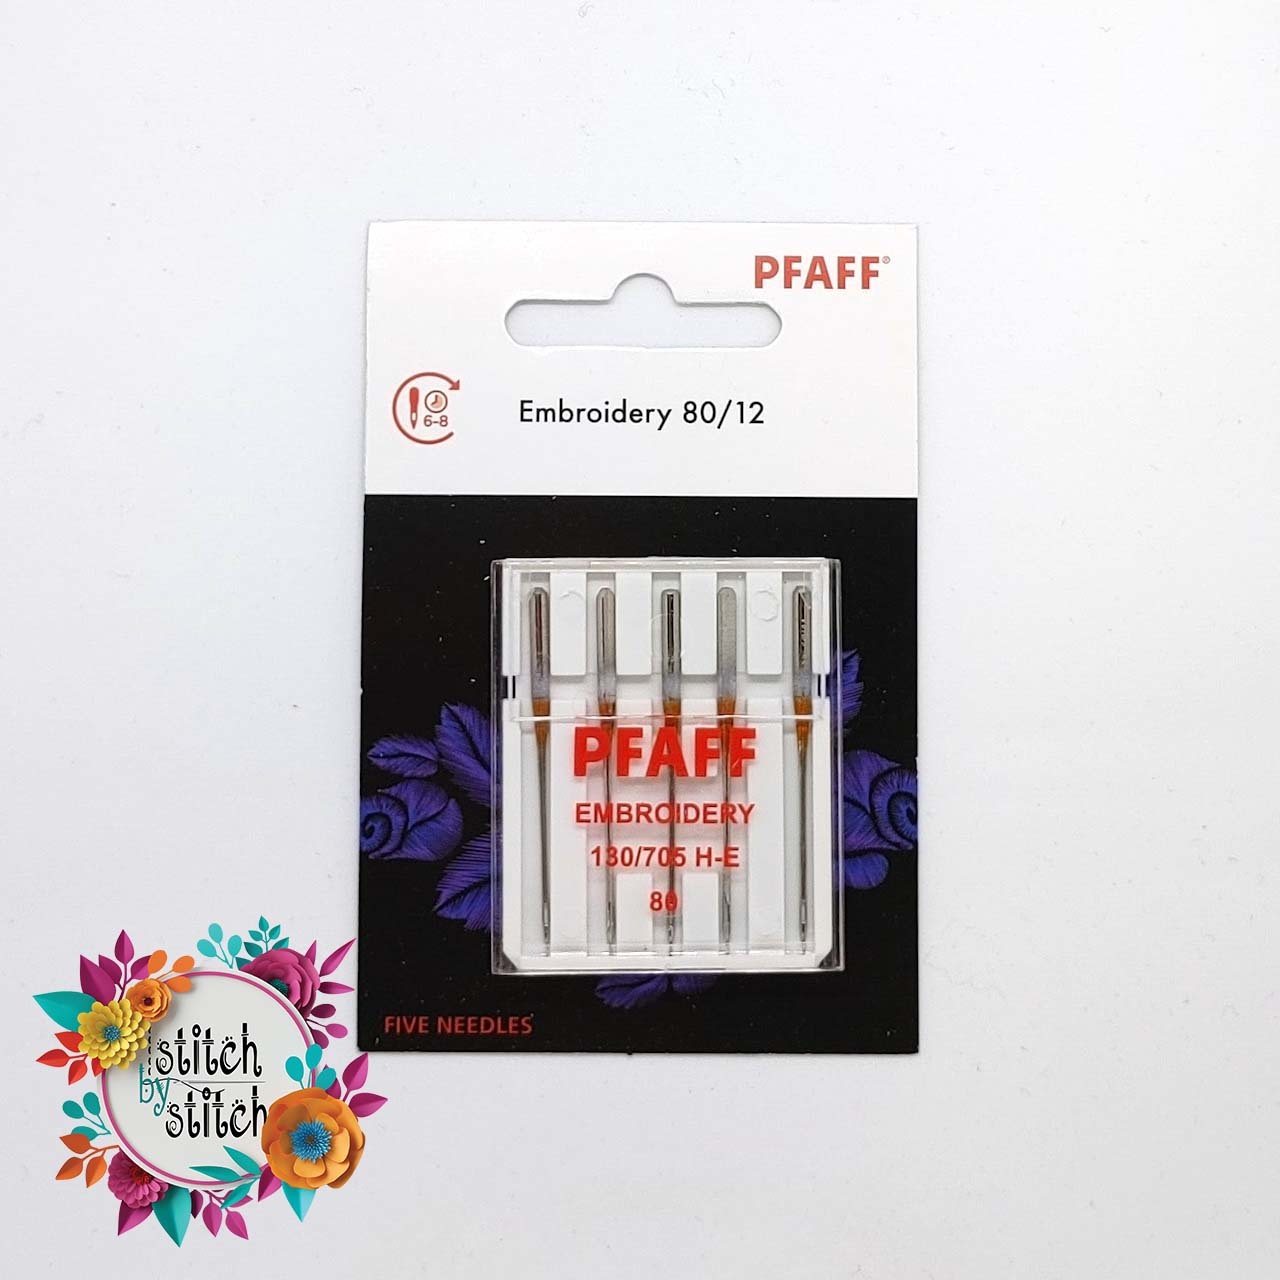 PFAFF Pfaff Embroidery Needle - Size 80/12 5 pack